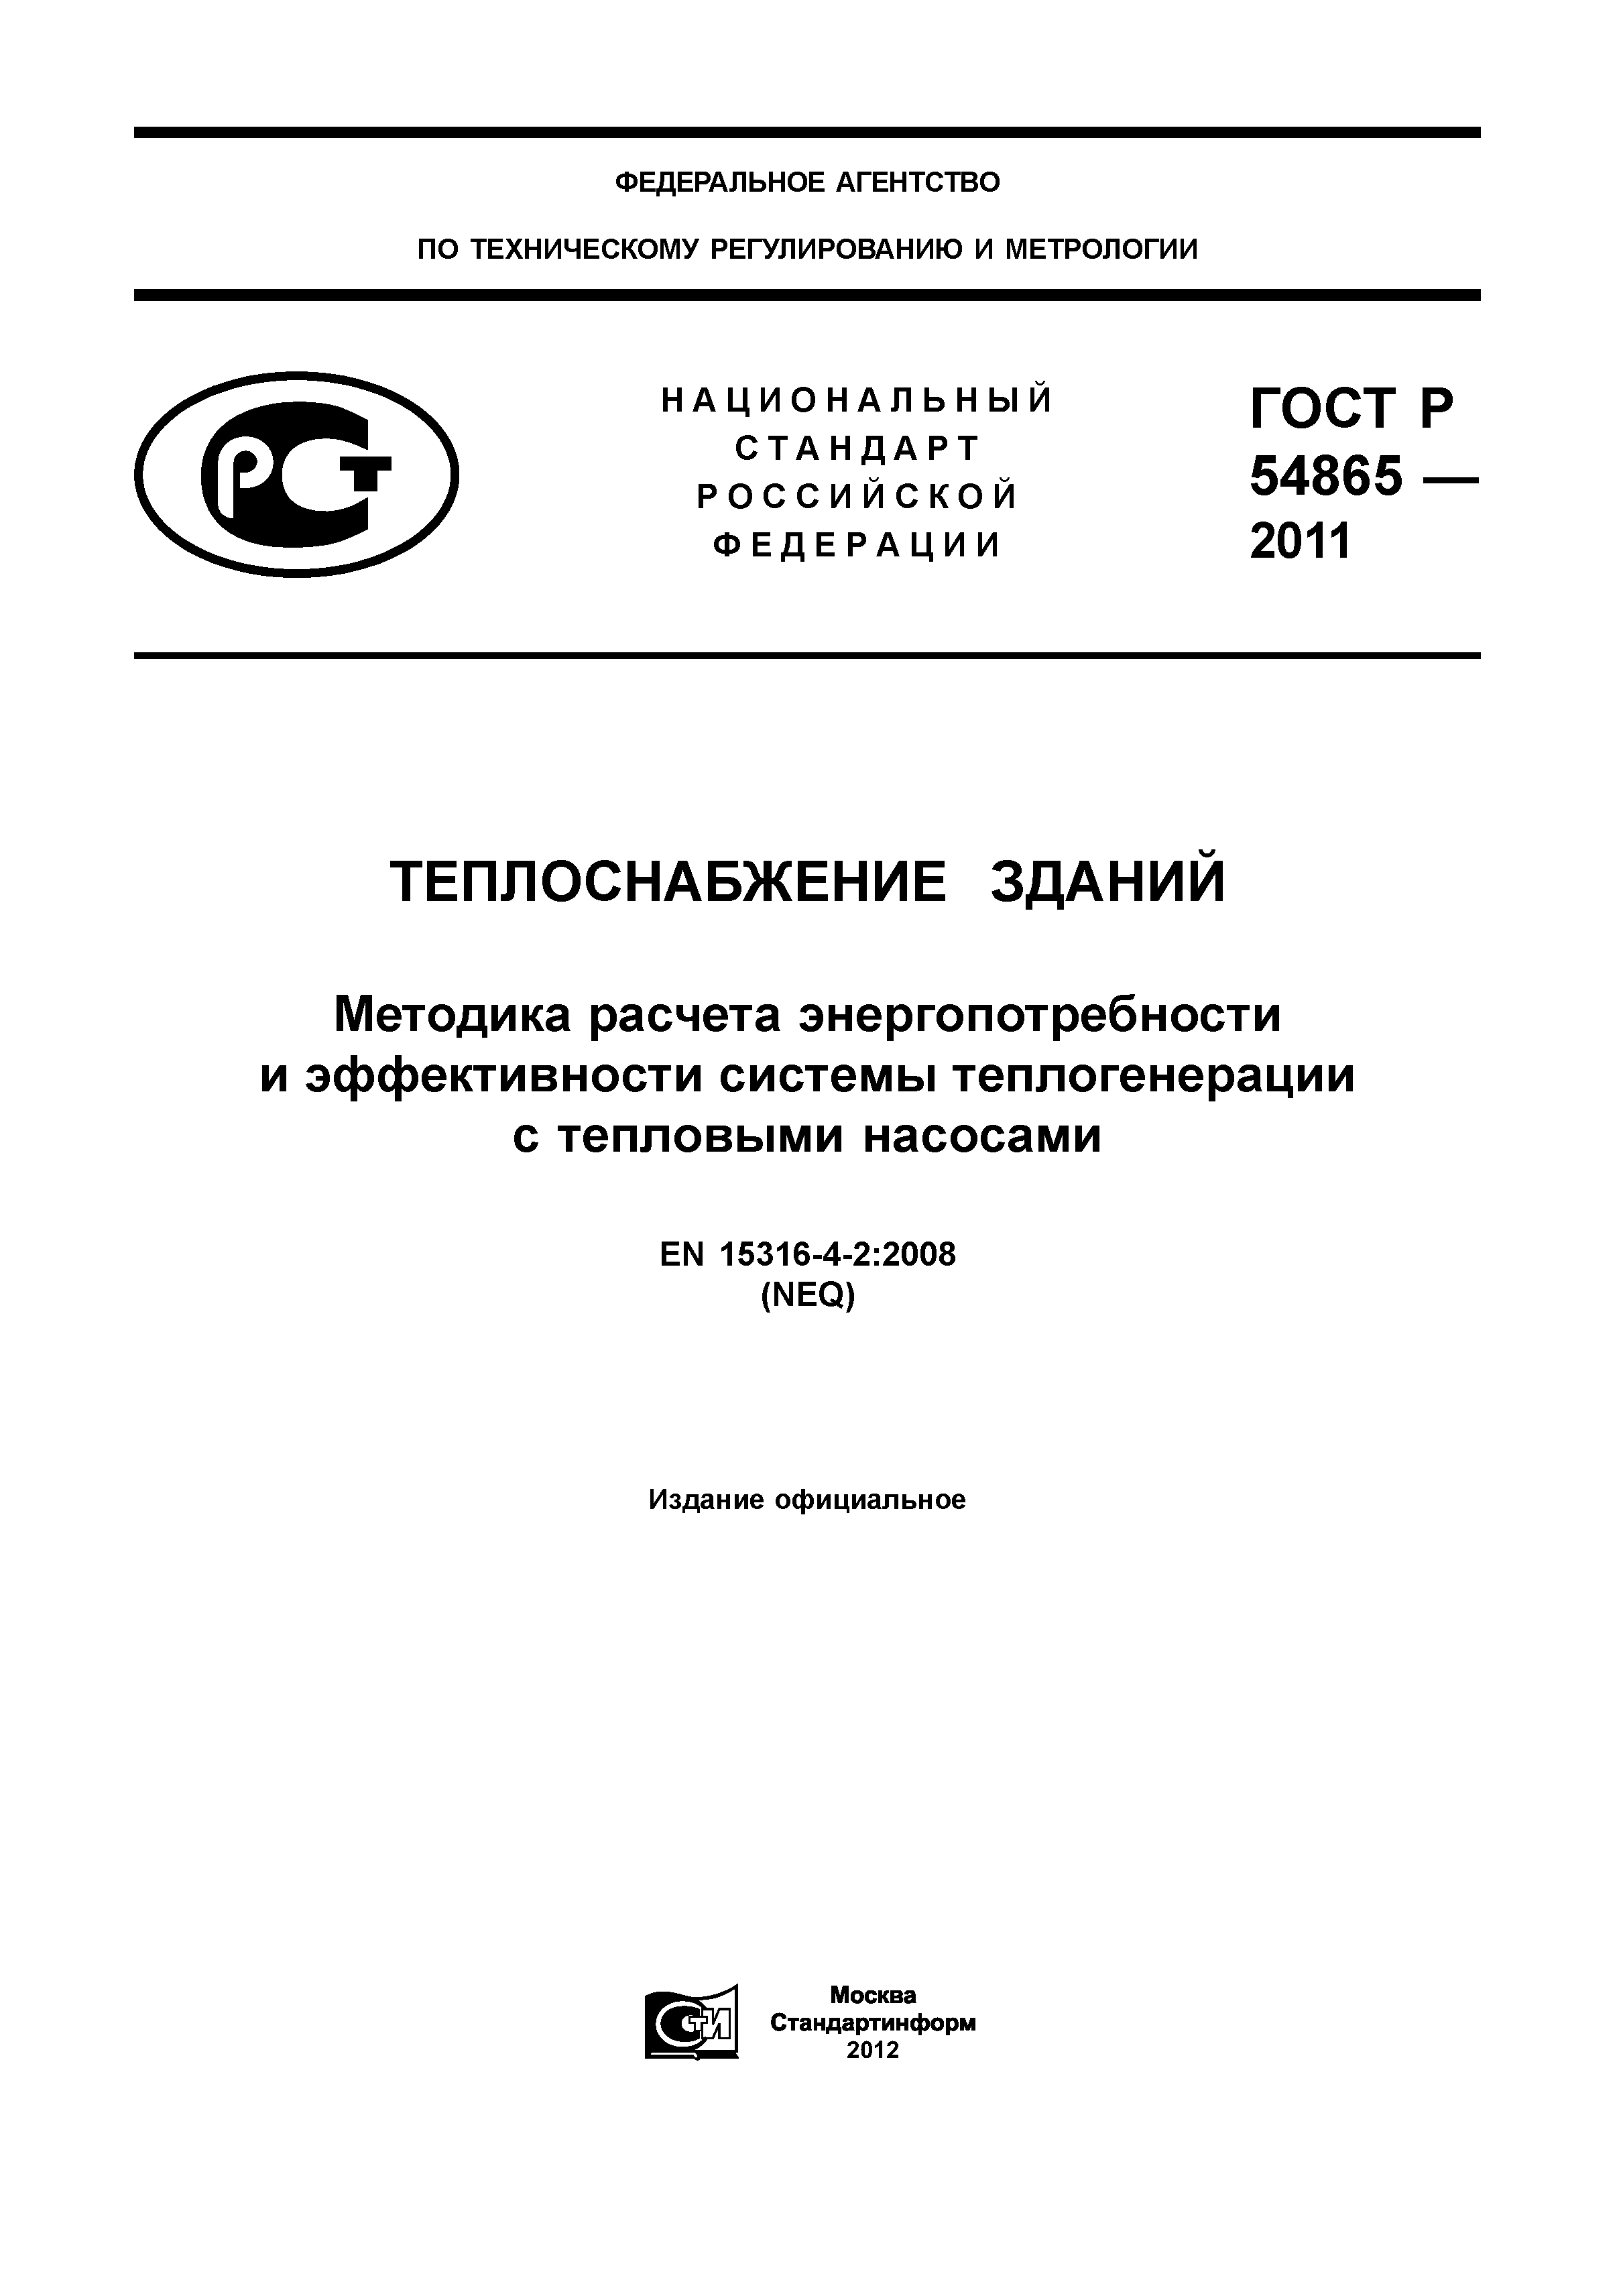 ГОСТ Р 54865-2011